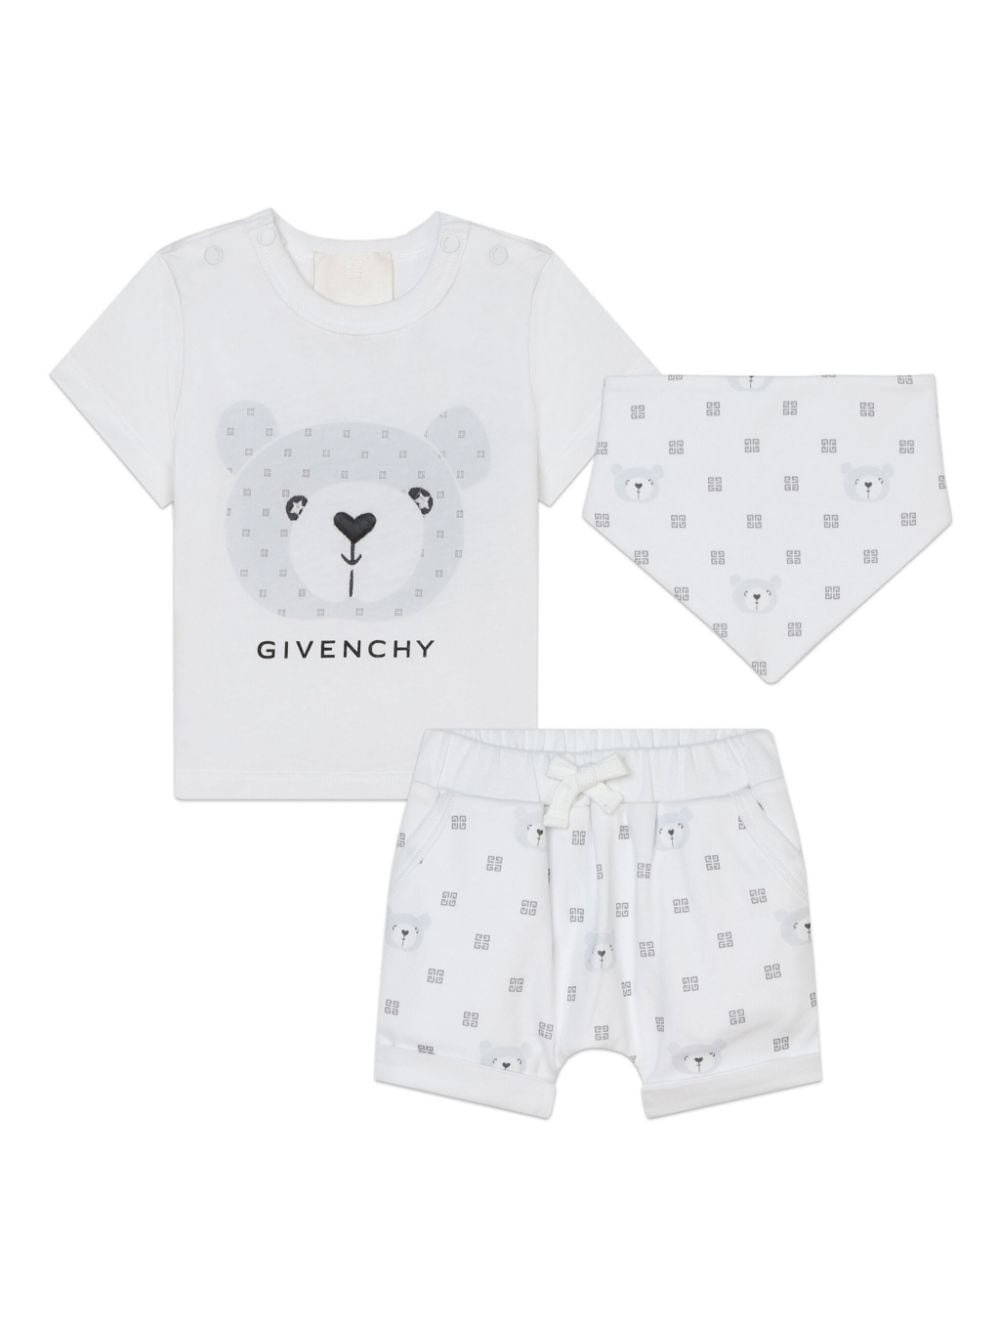 Givenchy Kids 4G cotton short set (set of three) - White